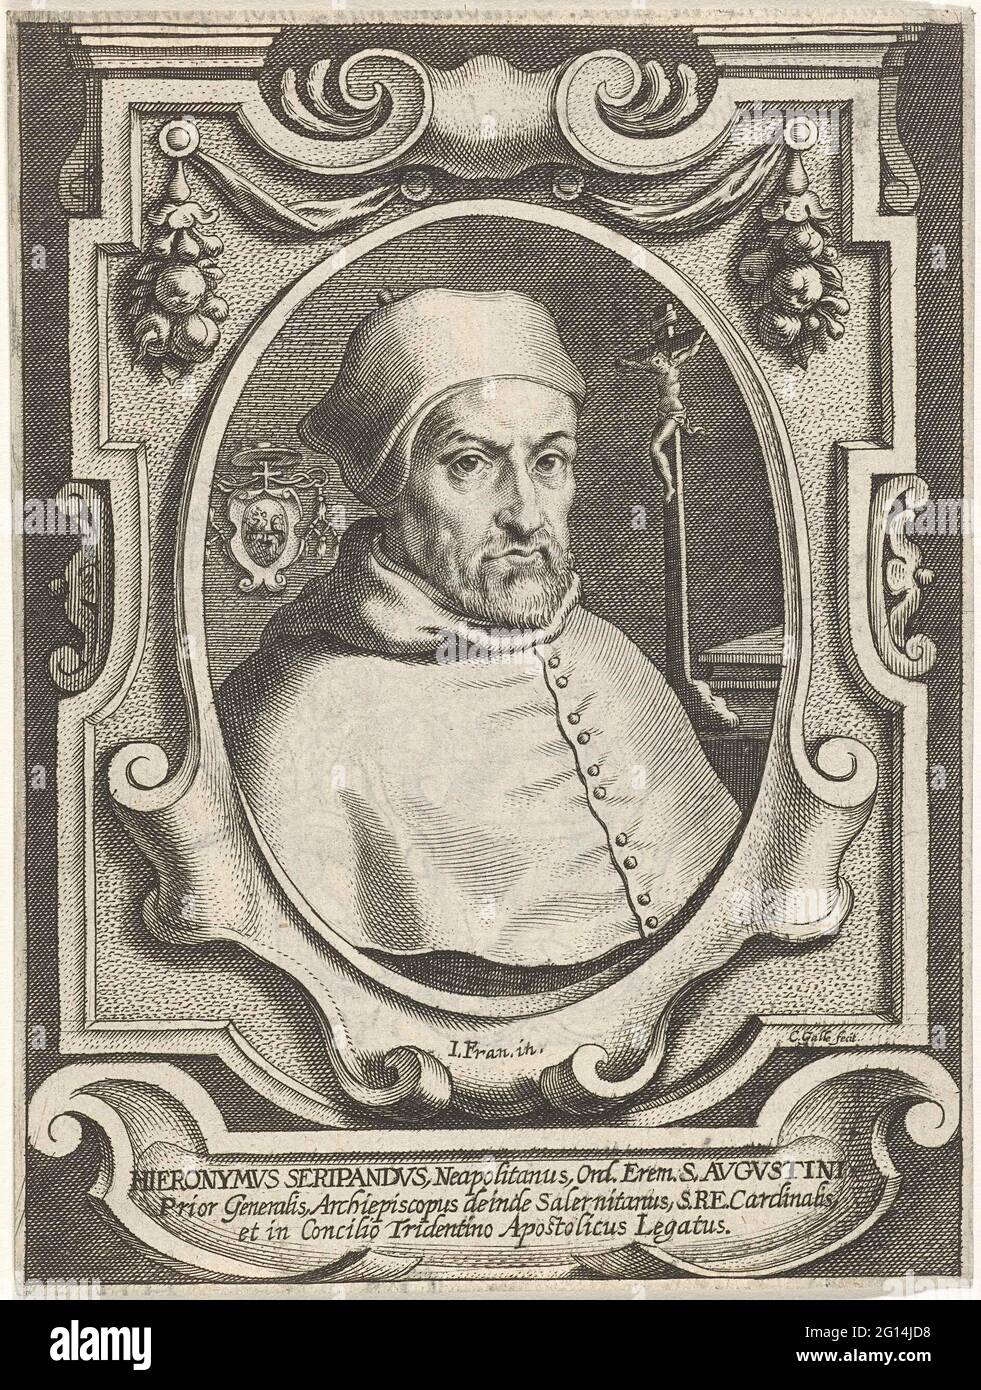 Portrait of the Augustijn and Cardinal Girolamo Seripando. Stock Photo